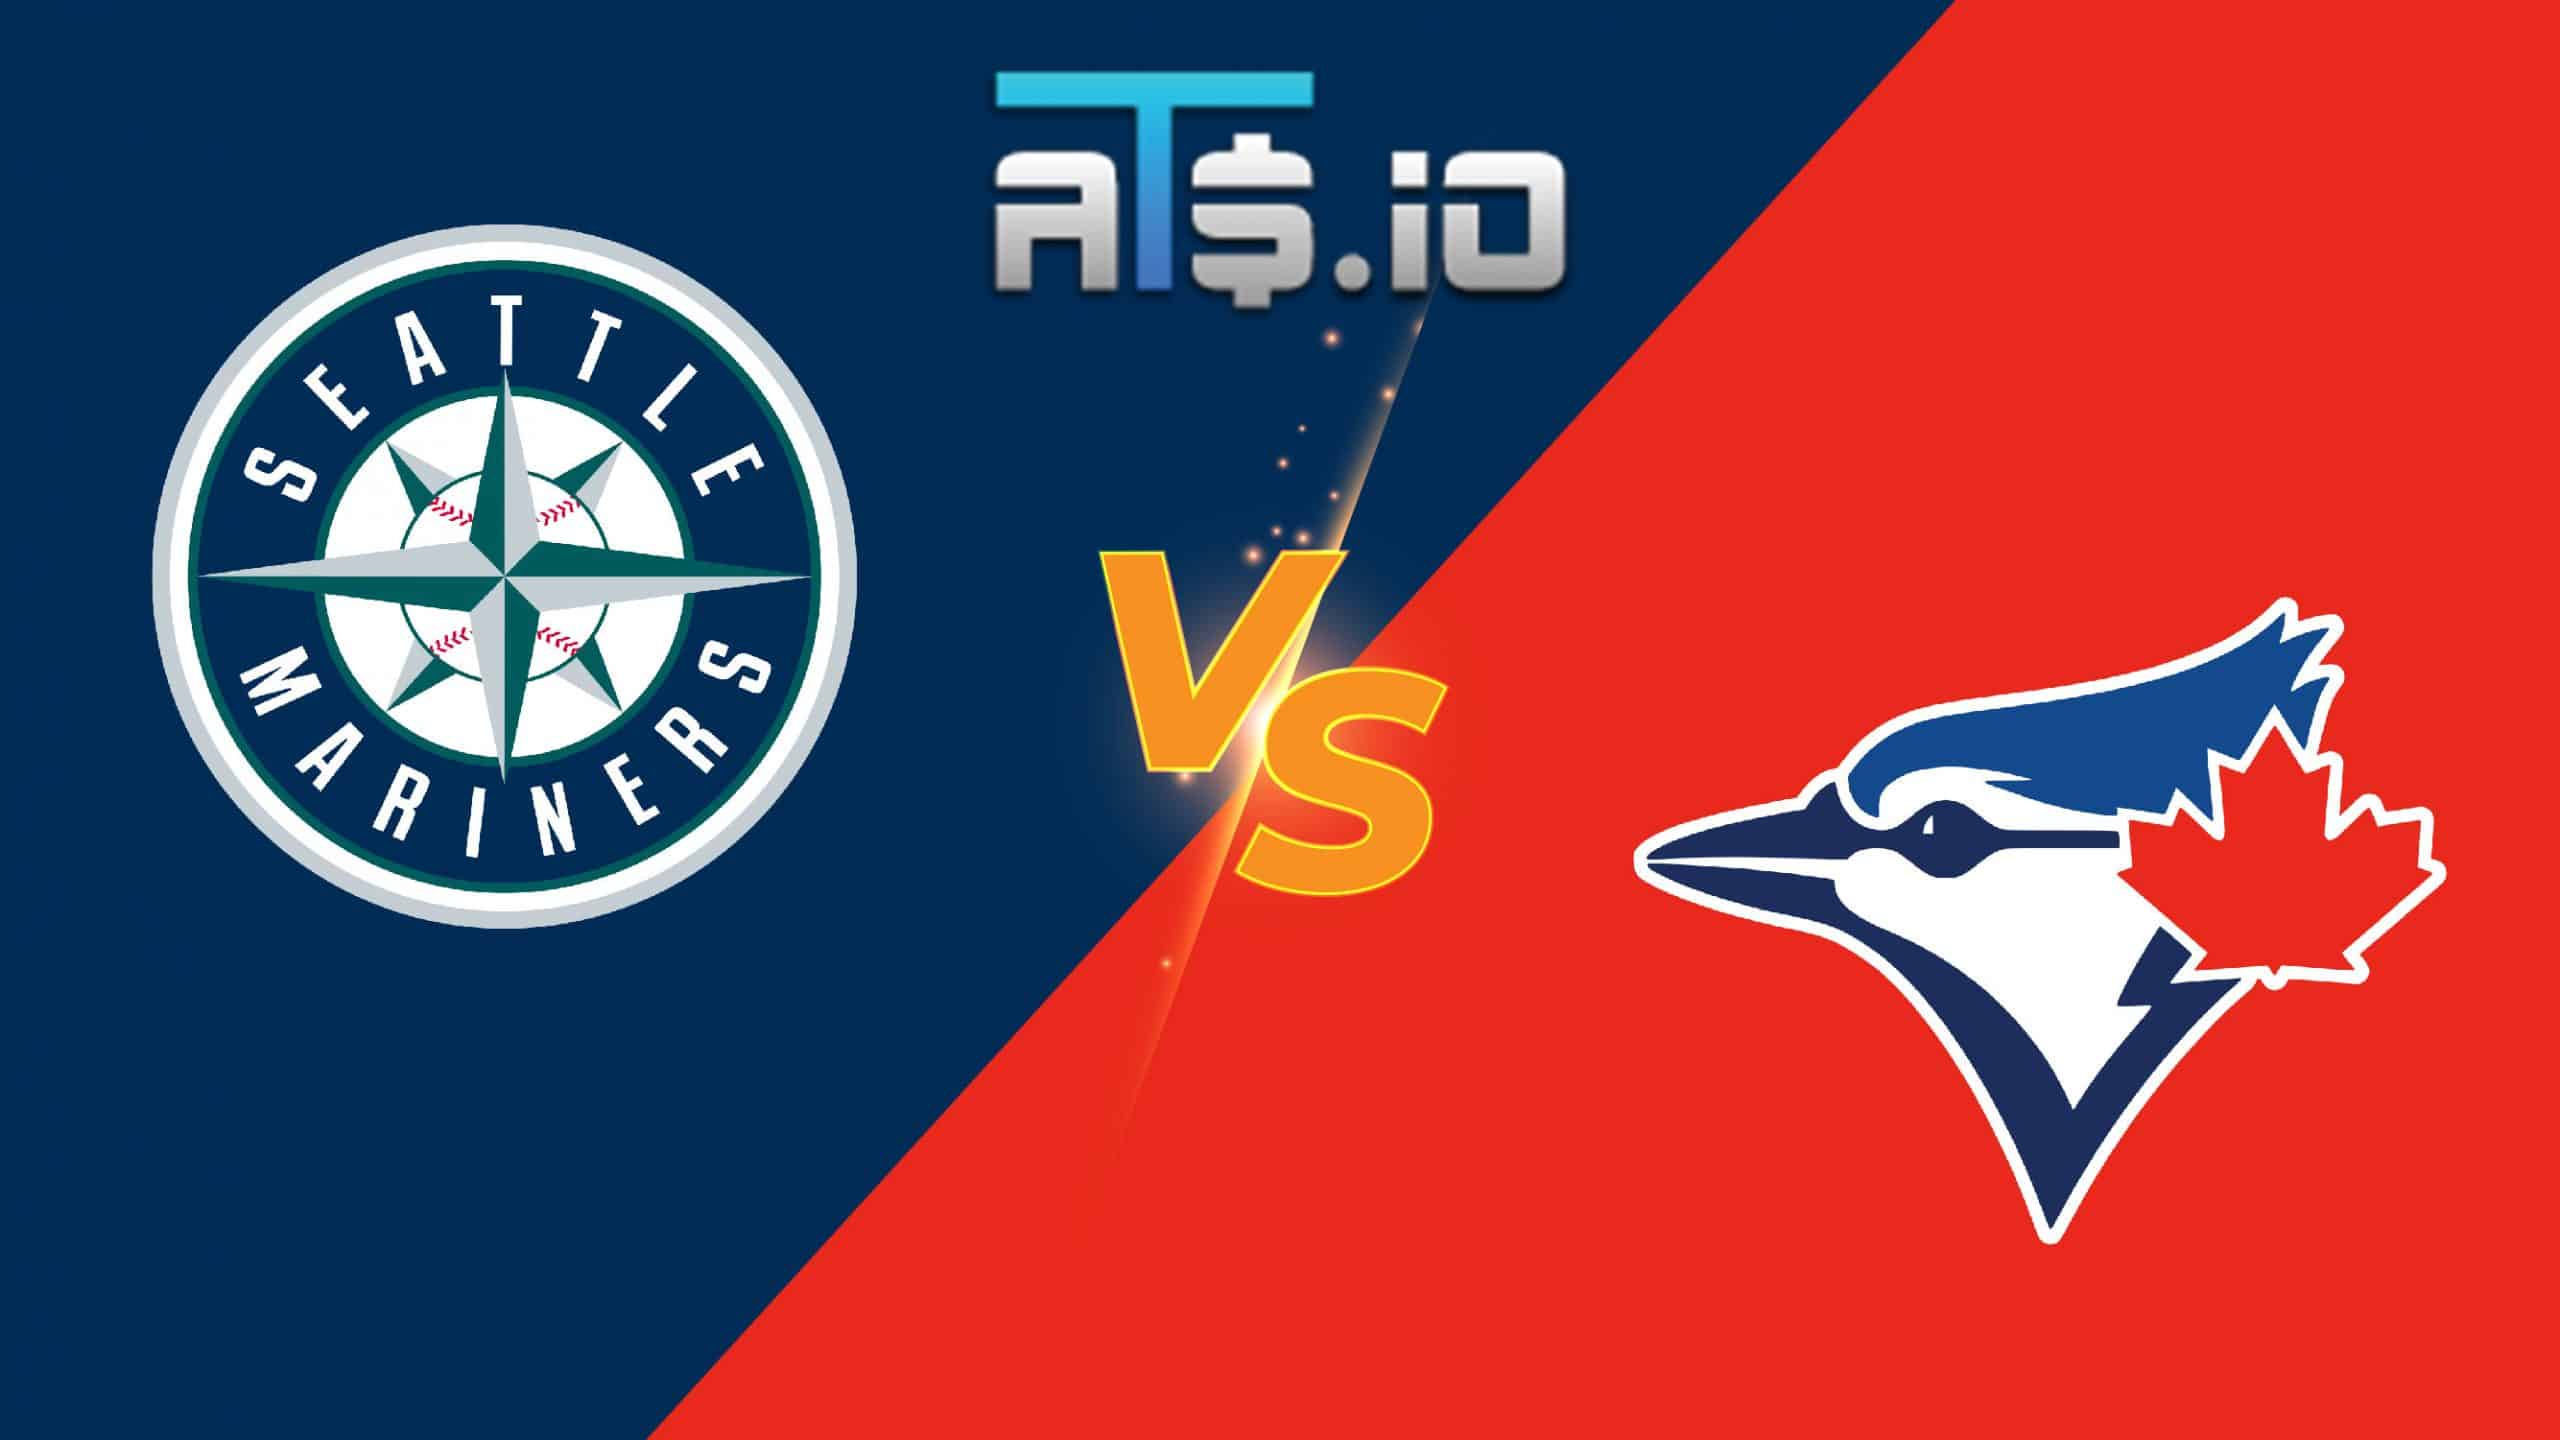 Seattle Mariners vs Toronto Blue Jays Game 1 Pick 10/7/22